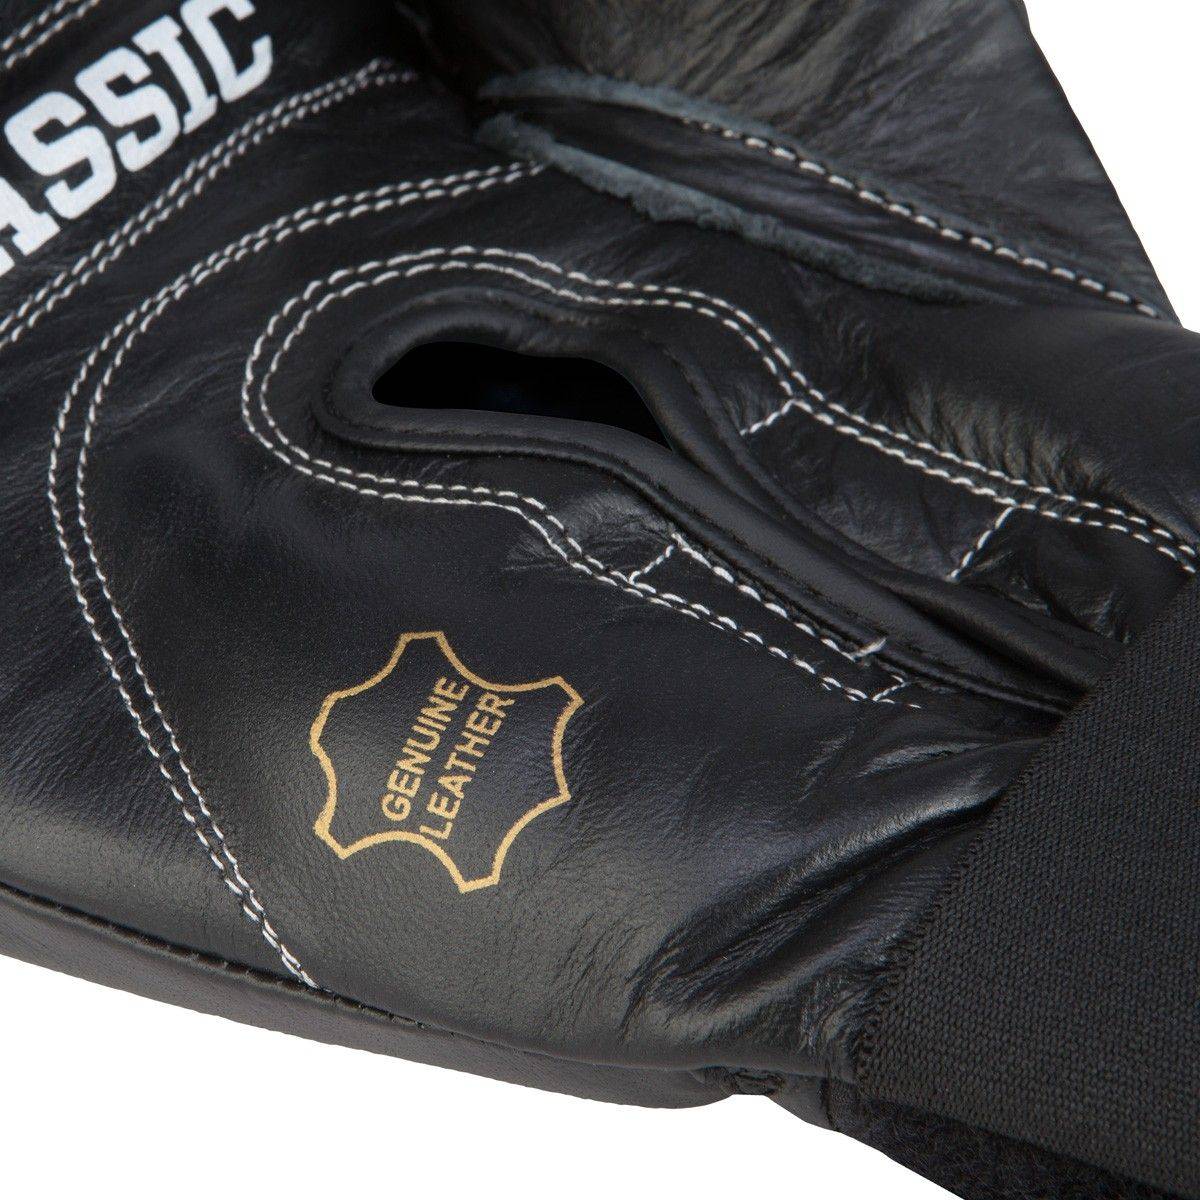 Боксерские перчатки TITLE Classic Leather Elastic 2.0-14